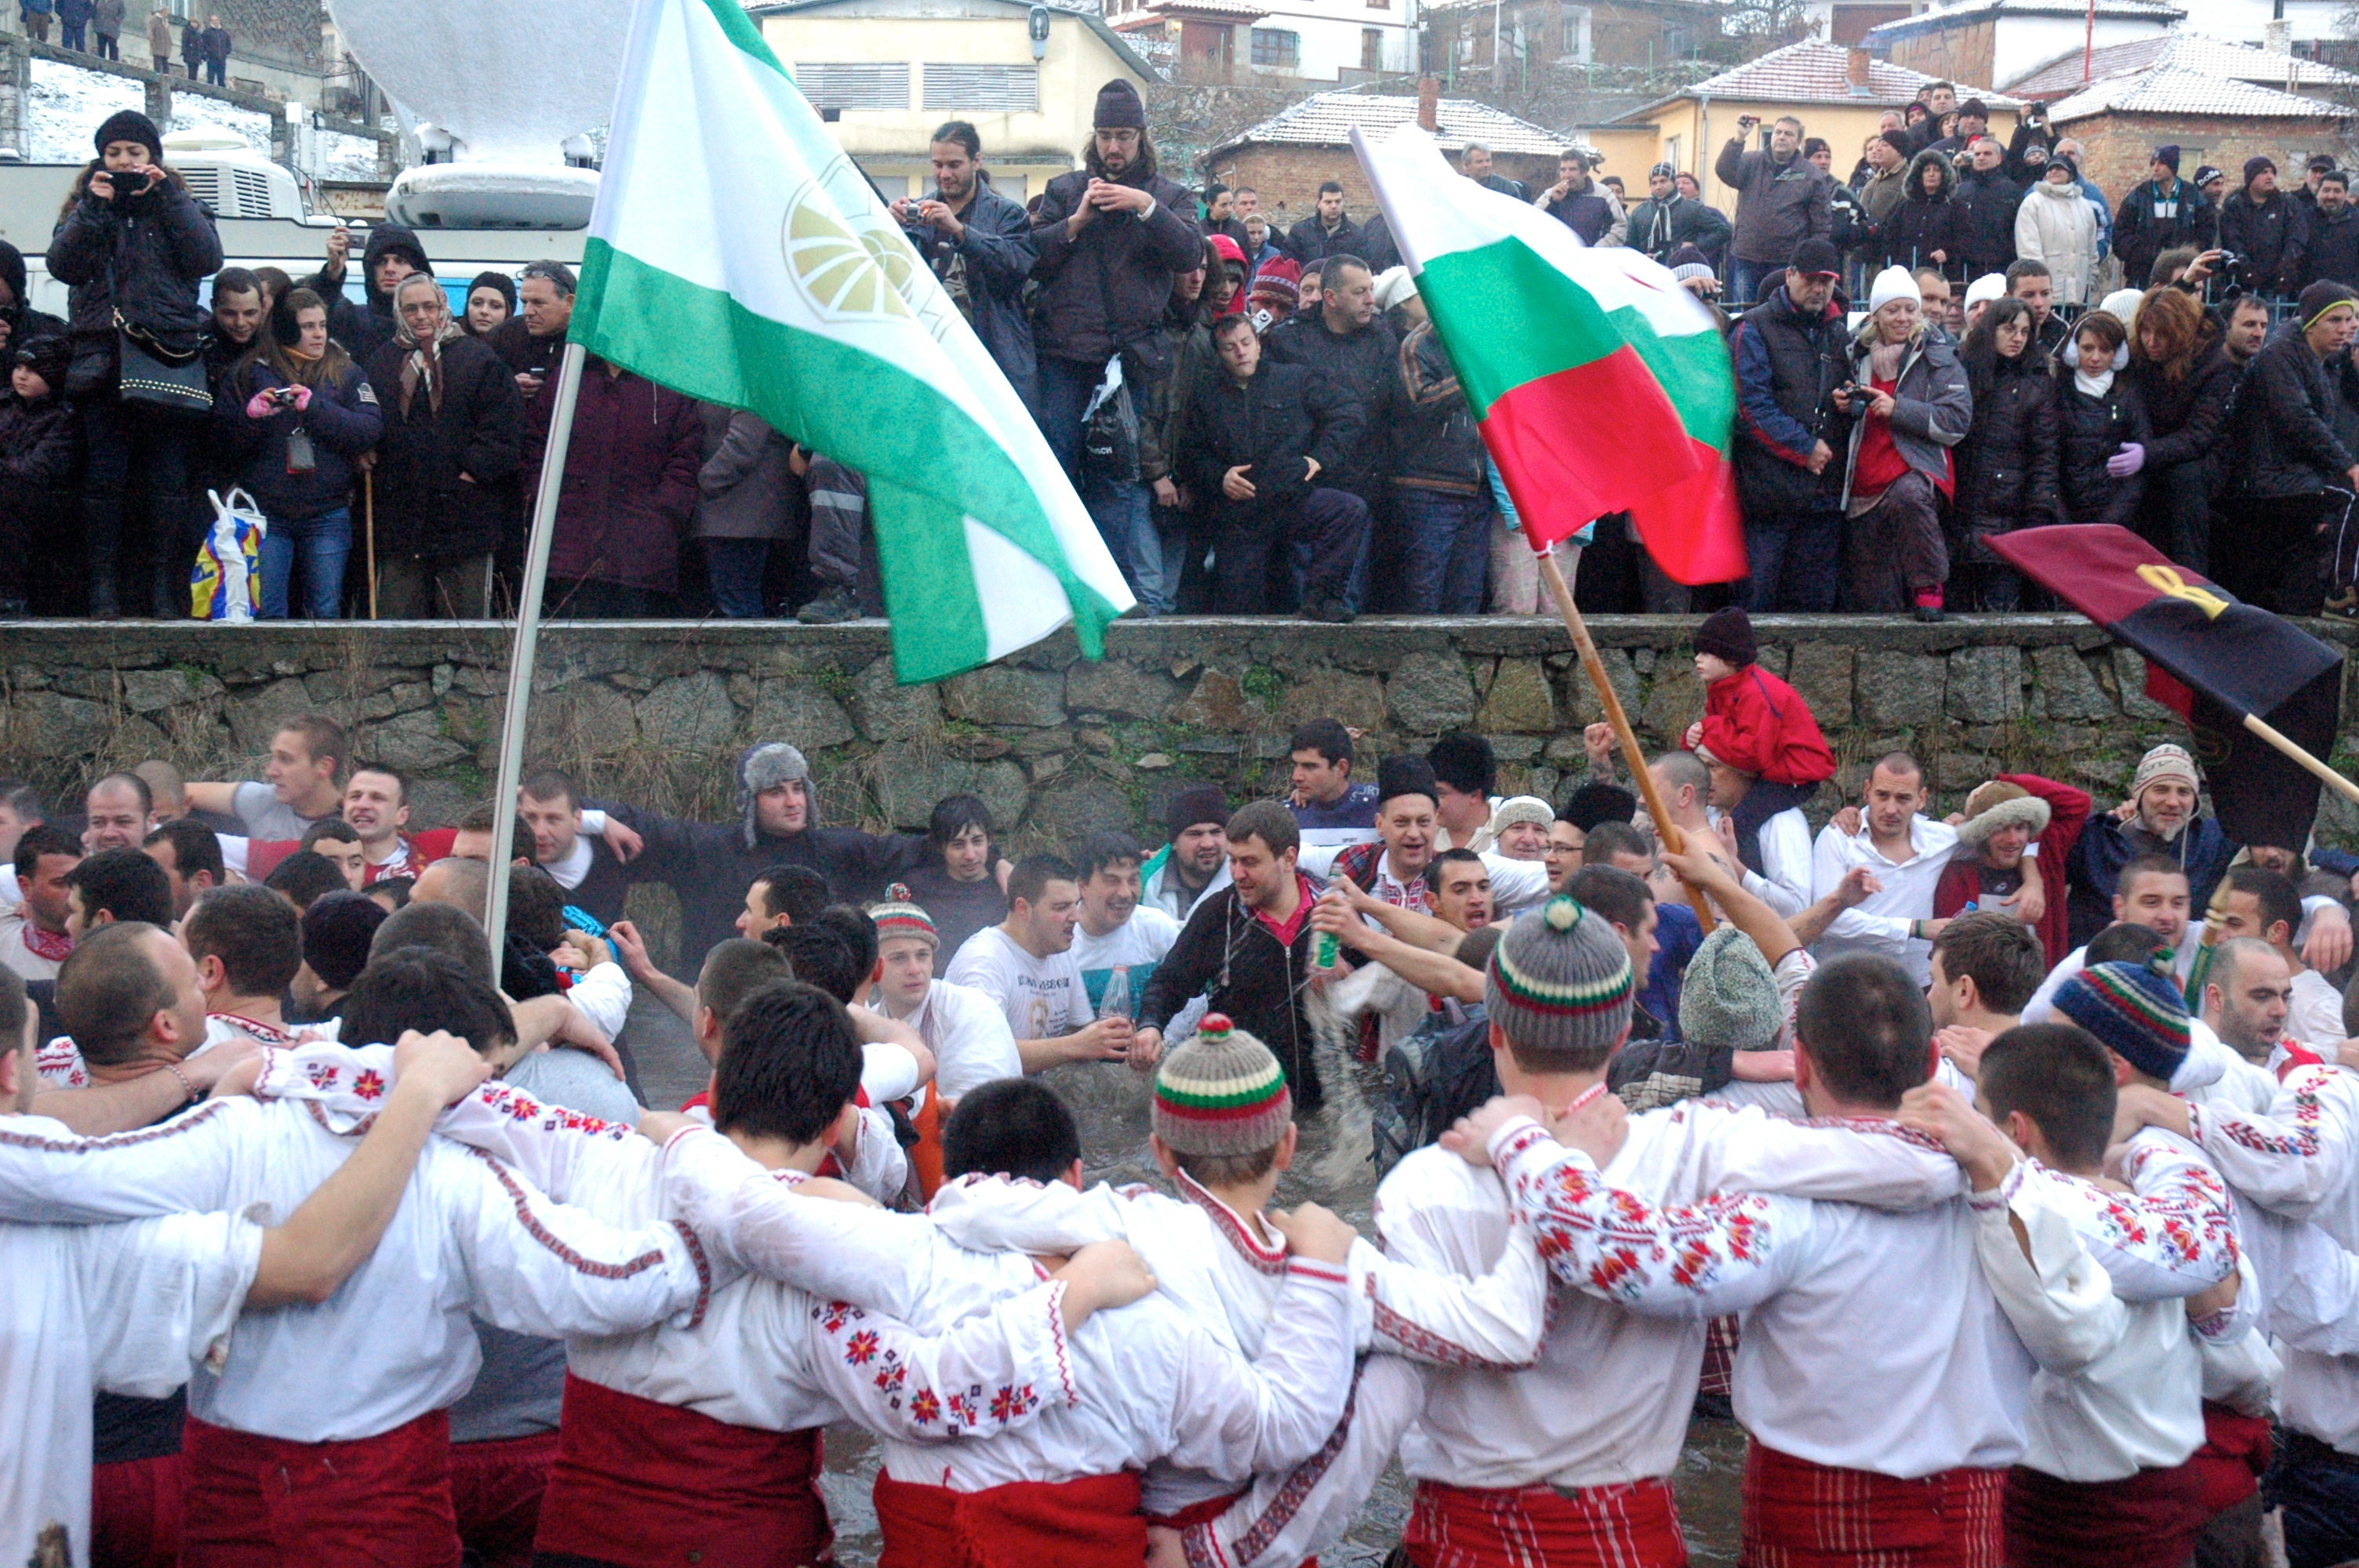 St Jordan's Day in Bulgaria by Kristen Gill Photograpjy